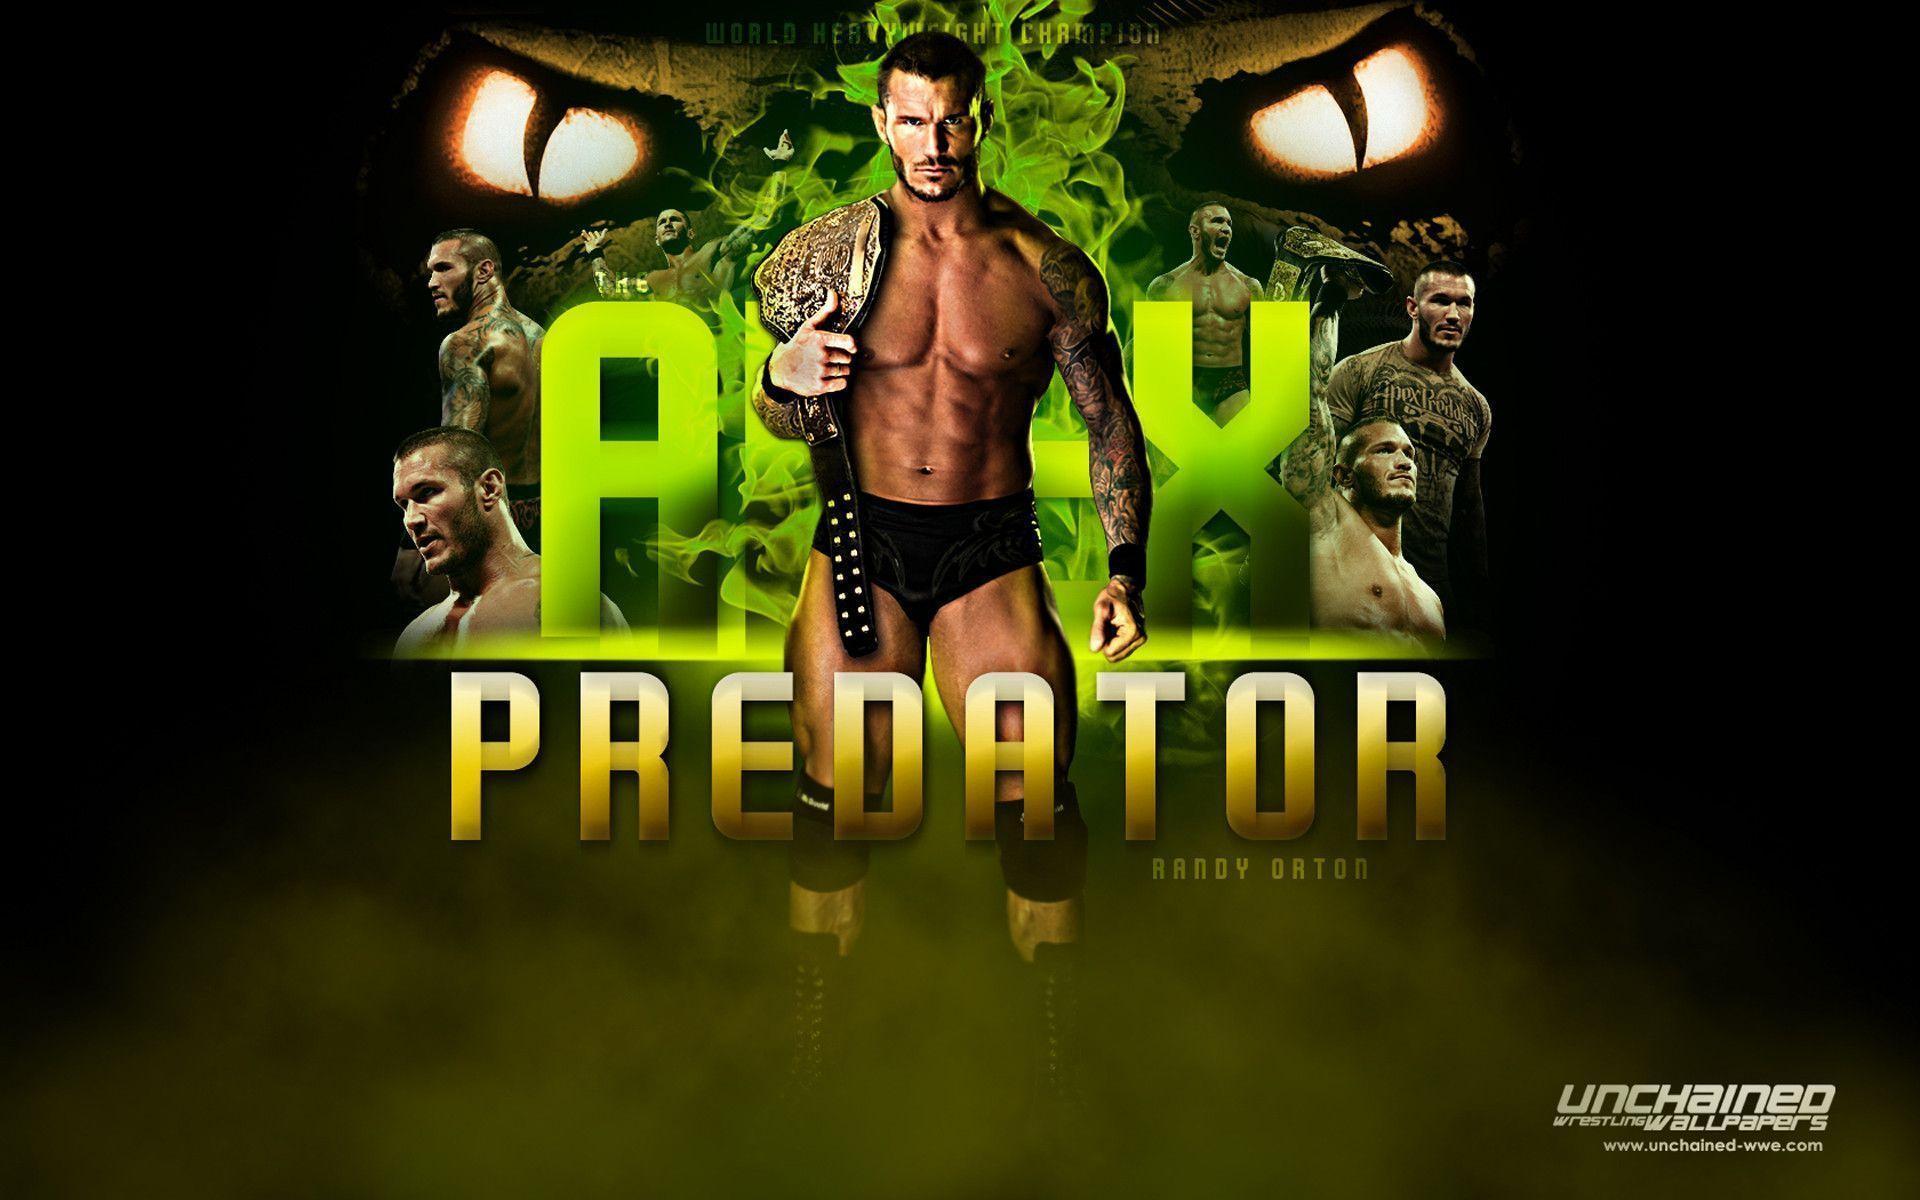 WWE Randy Orton "Apex Predator" Wallpaper Unchained WWE.com